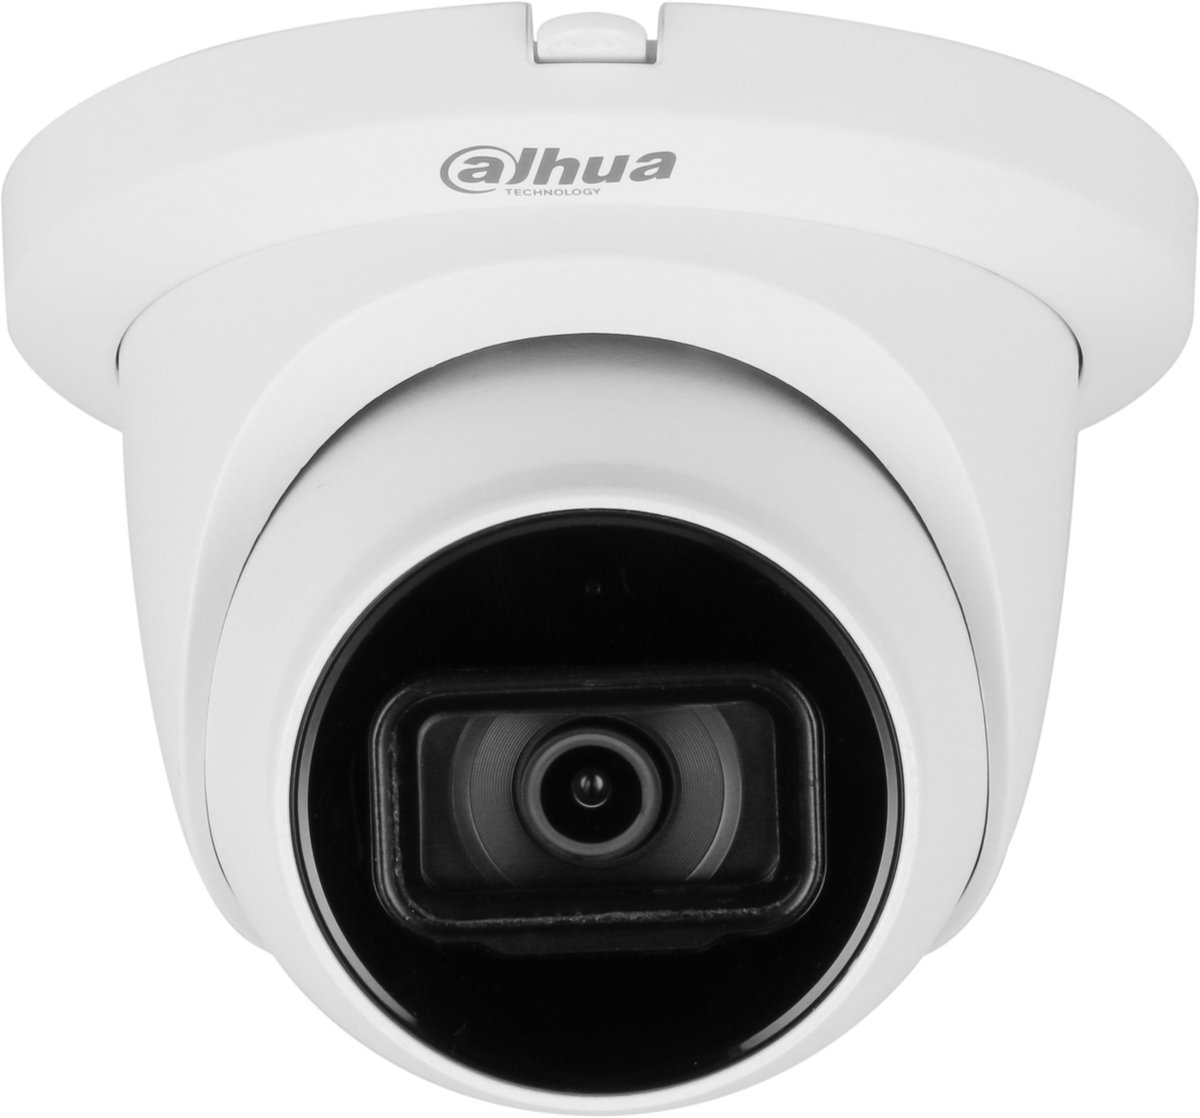 Dahua IPC-HDW2831TM-AS-S2 Ultra 4K HD 8MP Starlight buiten eyeball camera met POE, Wit, microfoon, IR nachtzicht, vaste lens en 120dB WDR - Beveiligingscamera IP camera bewakingscamera camerabewaking veiligheidscamera beveiliging netwerk camer